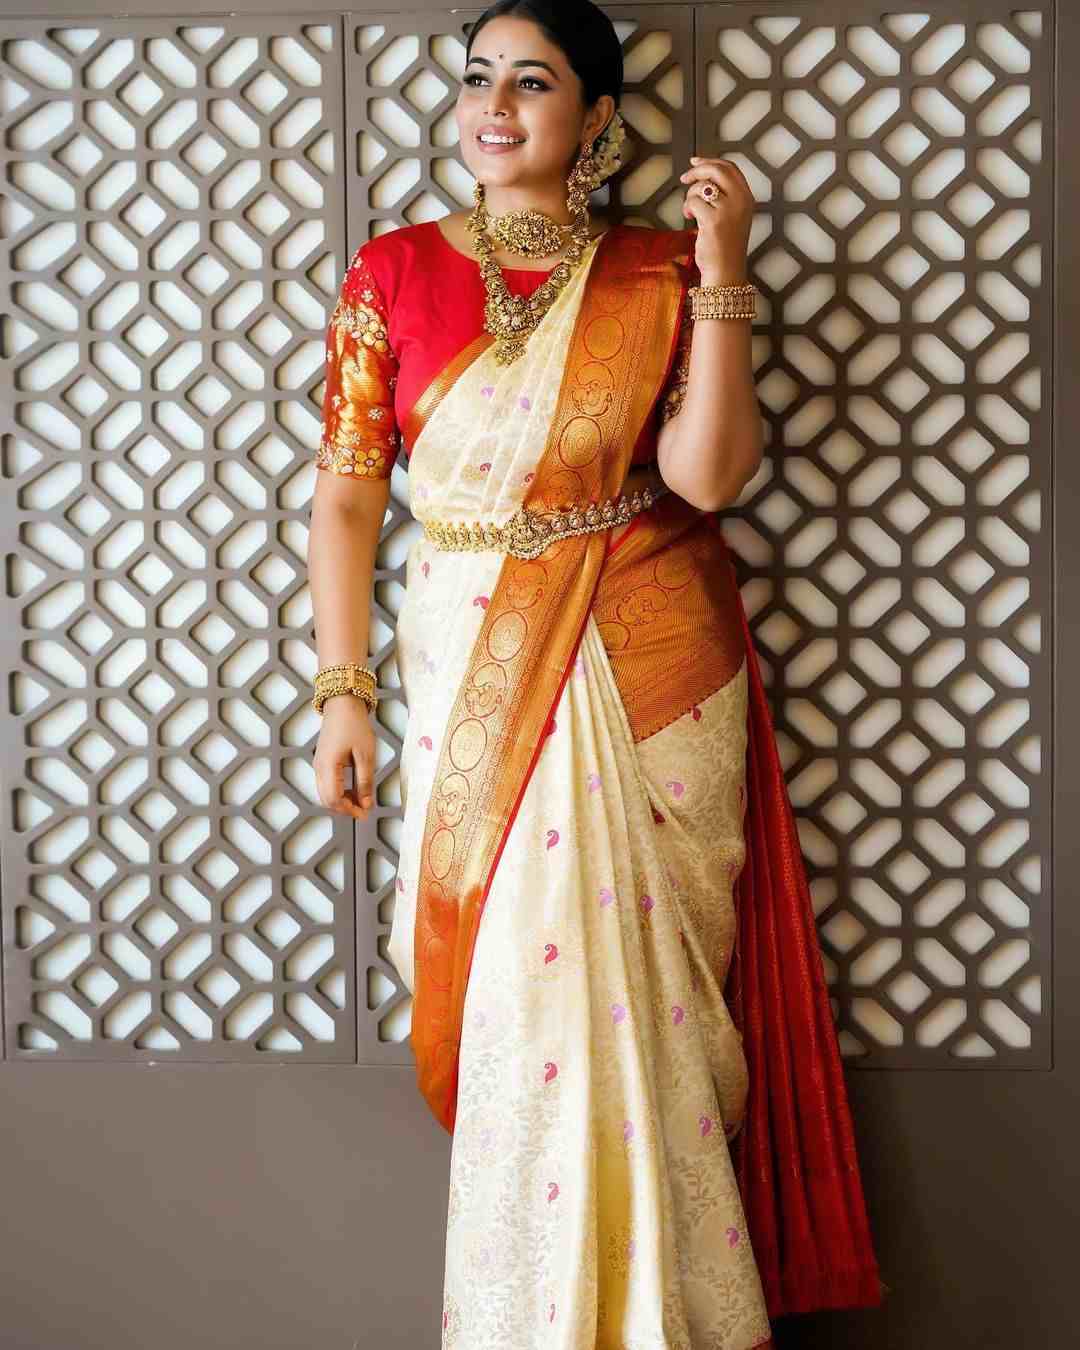 Purnaa as beautiful as a bride